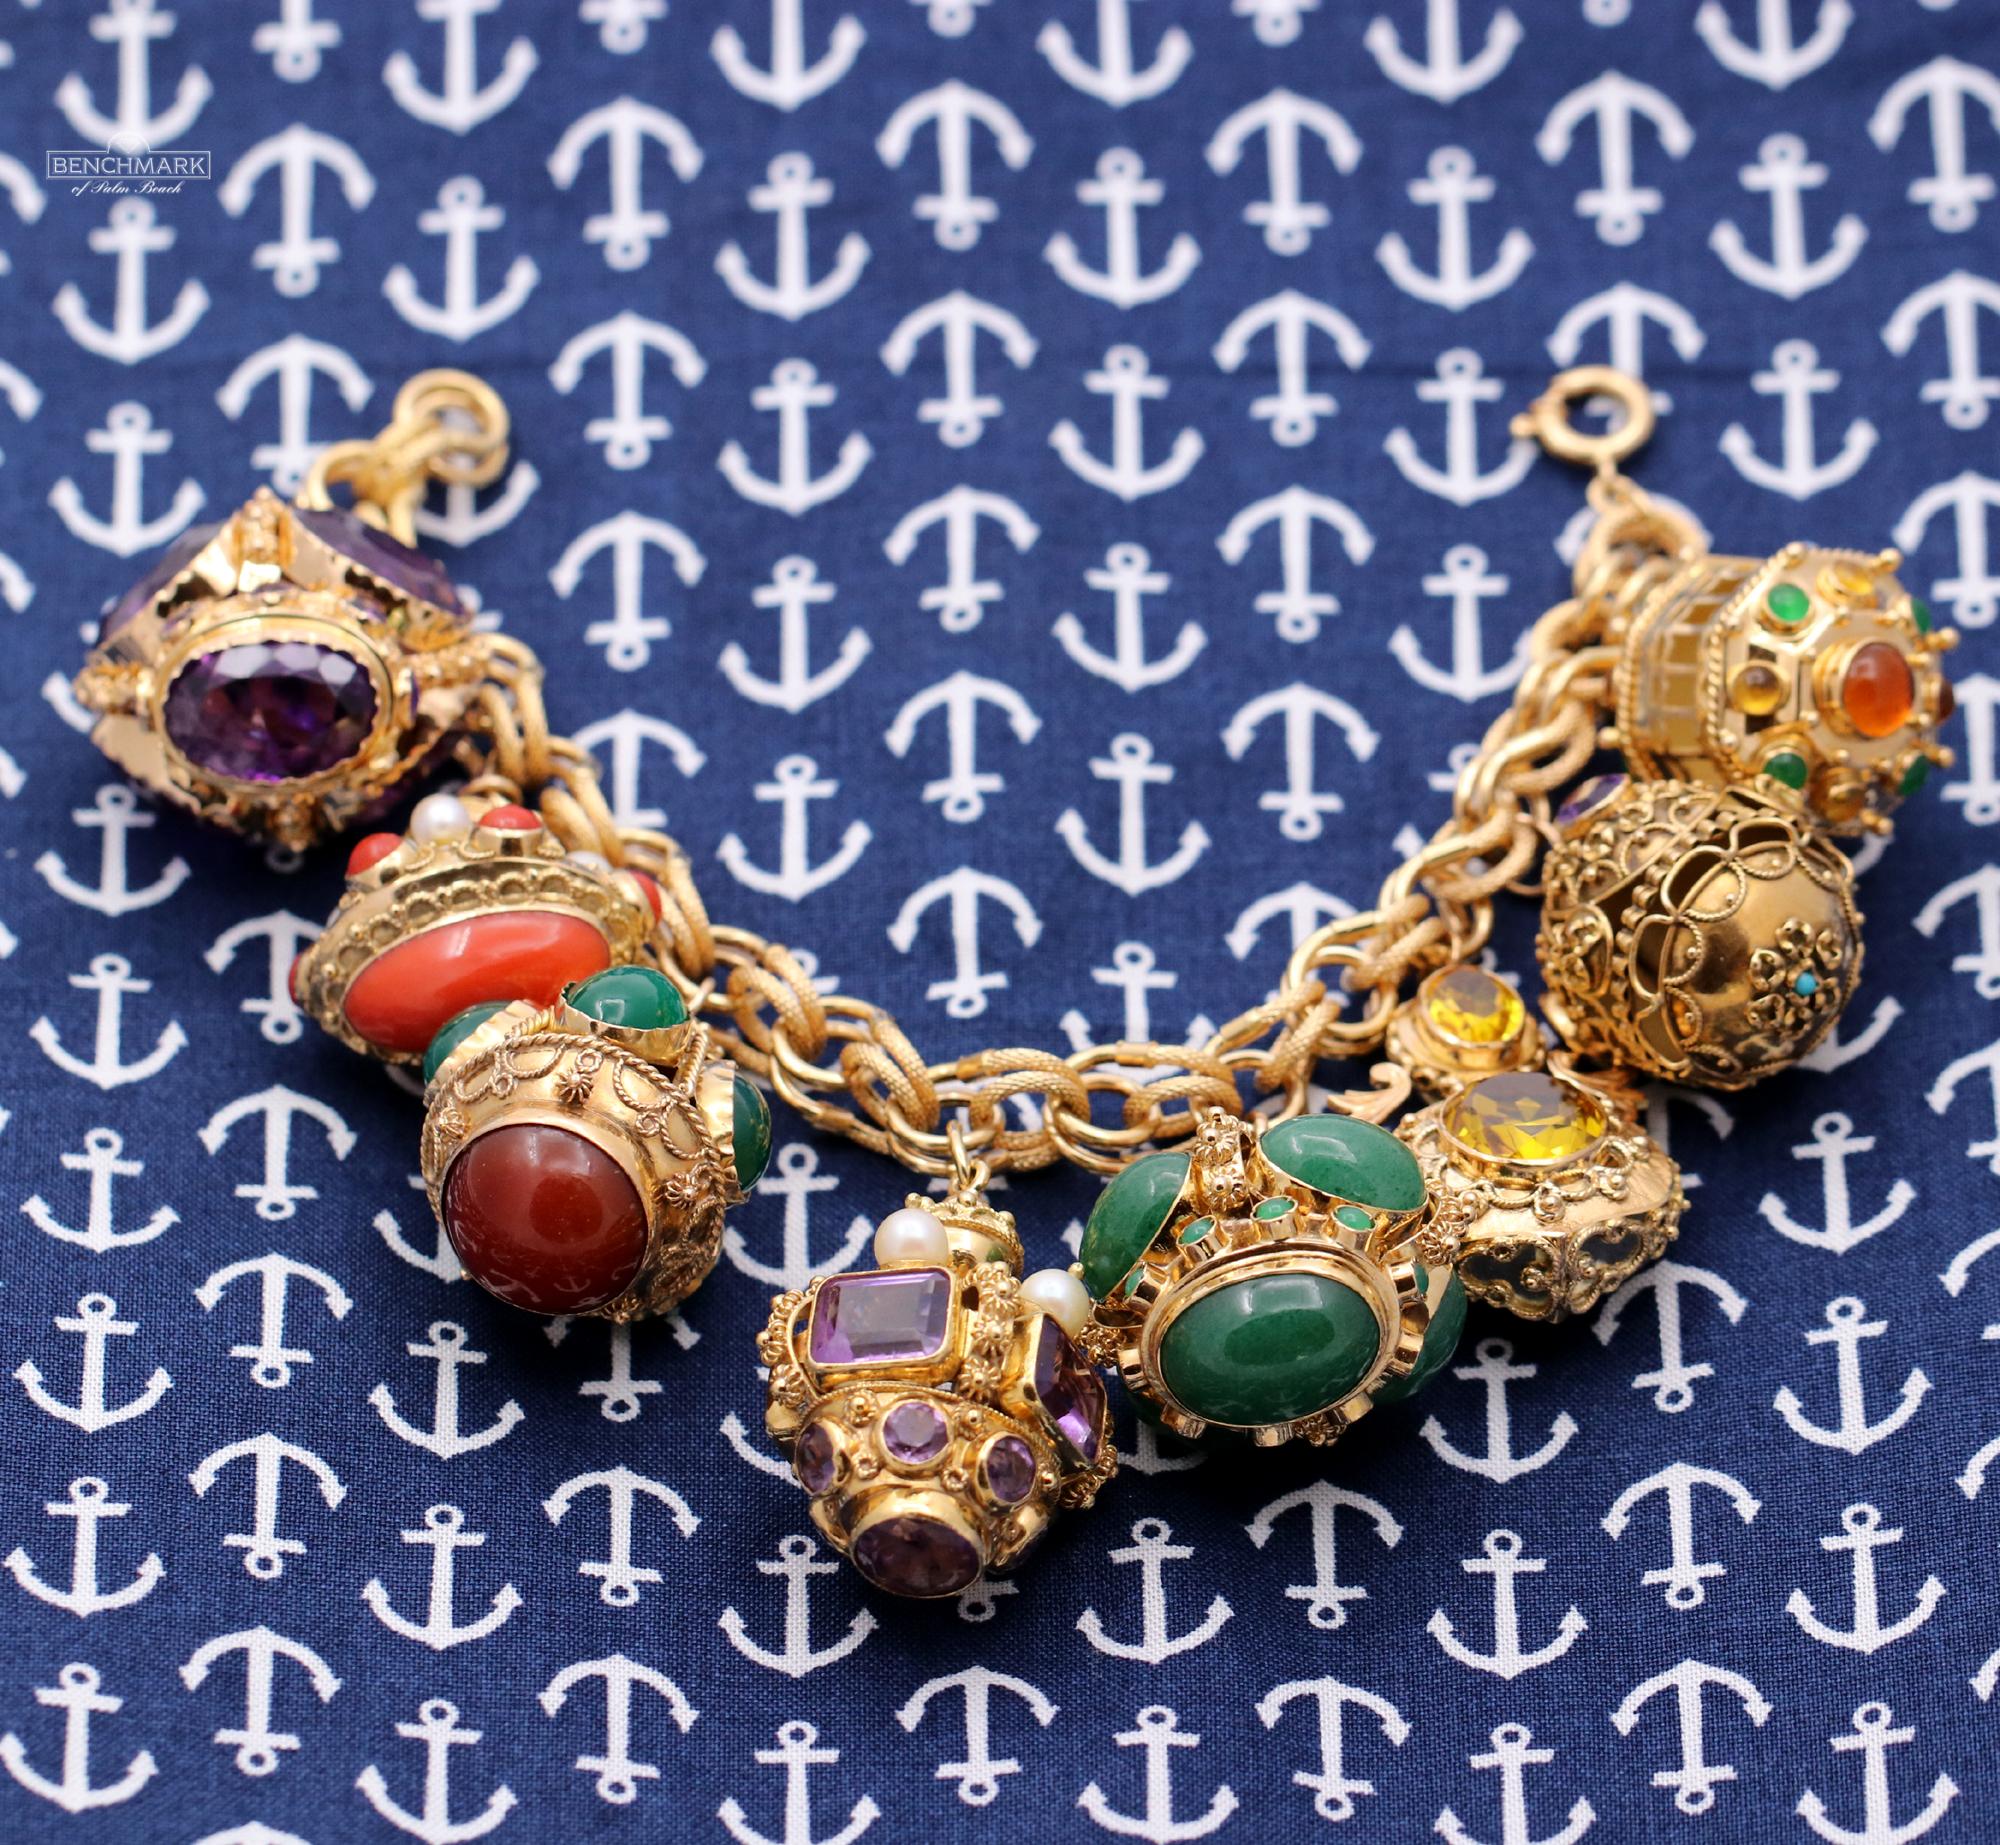 italian gold charm bracelets